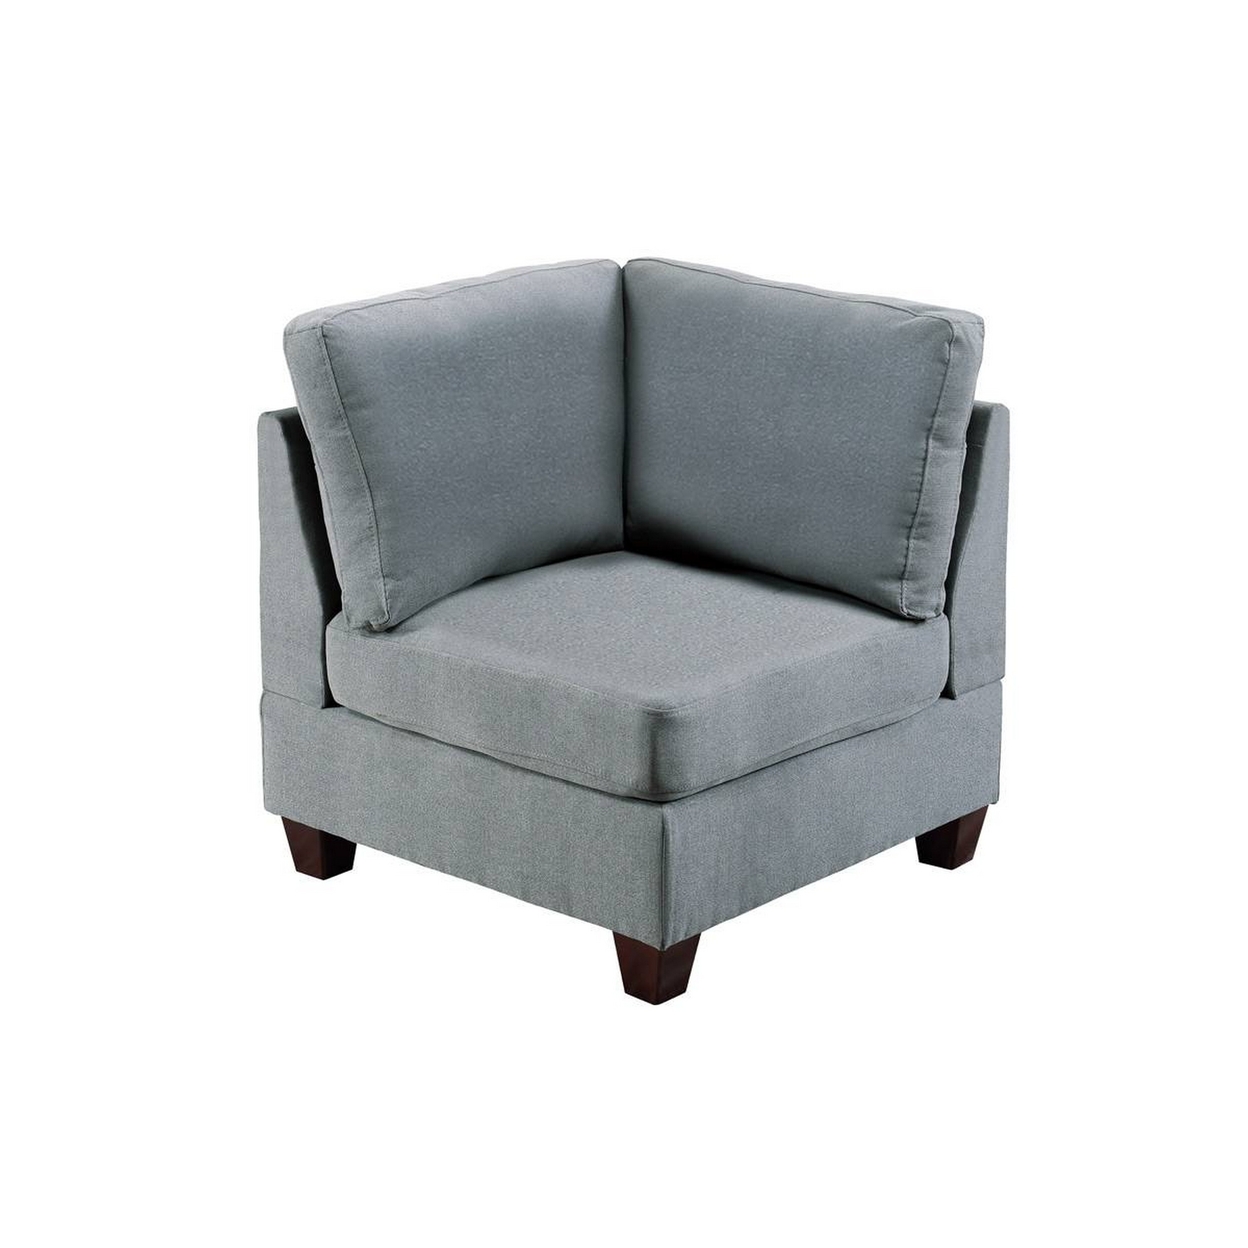 Saltoro Sherpi Remy 32 Inch Modular Corner Sofa Chair, Soft Gray Chenille, Solid Wood - Saltoro Sherpi